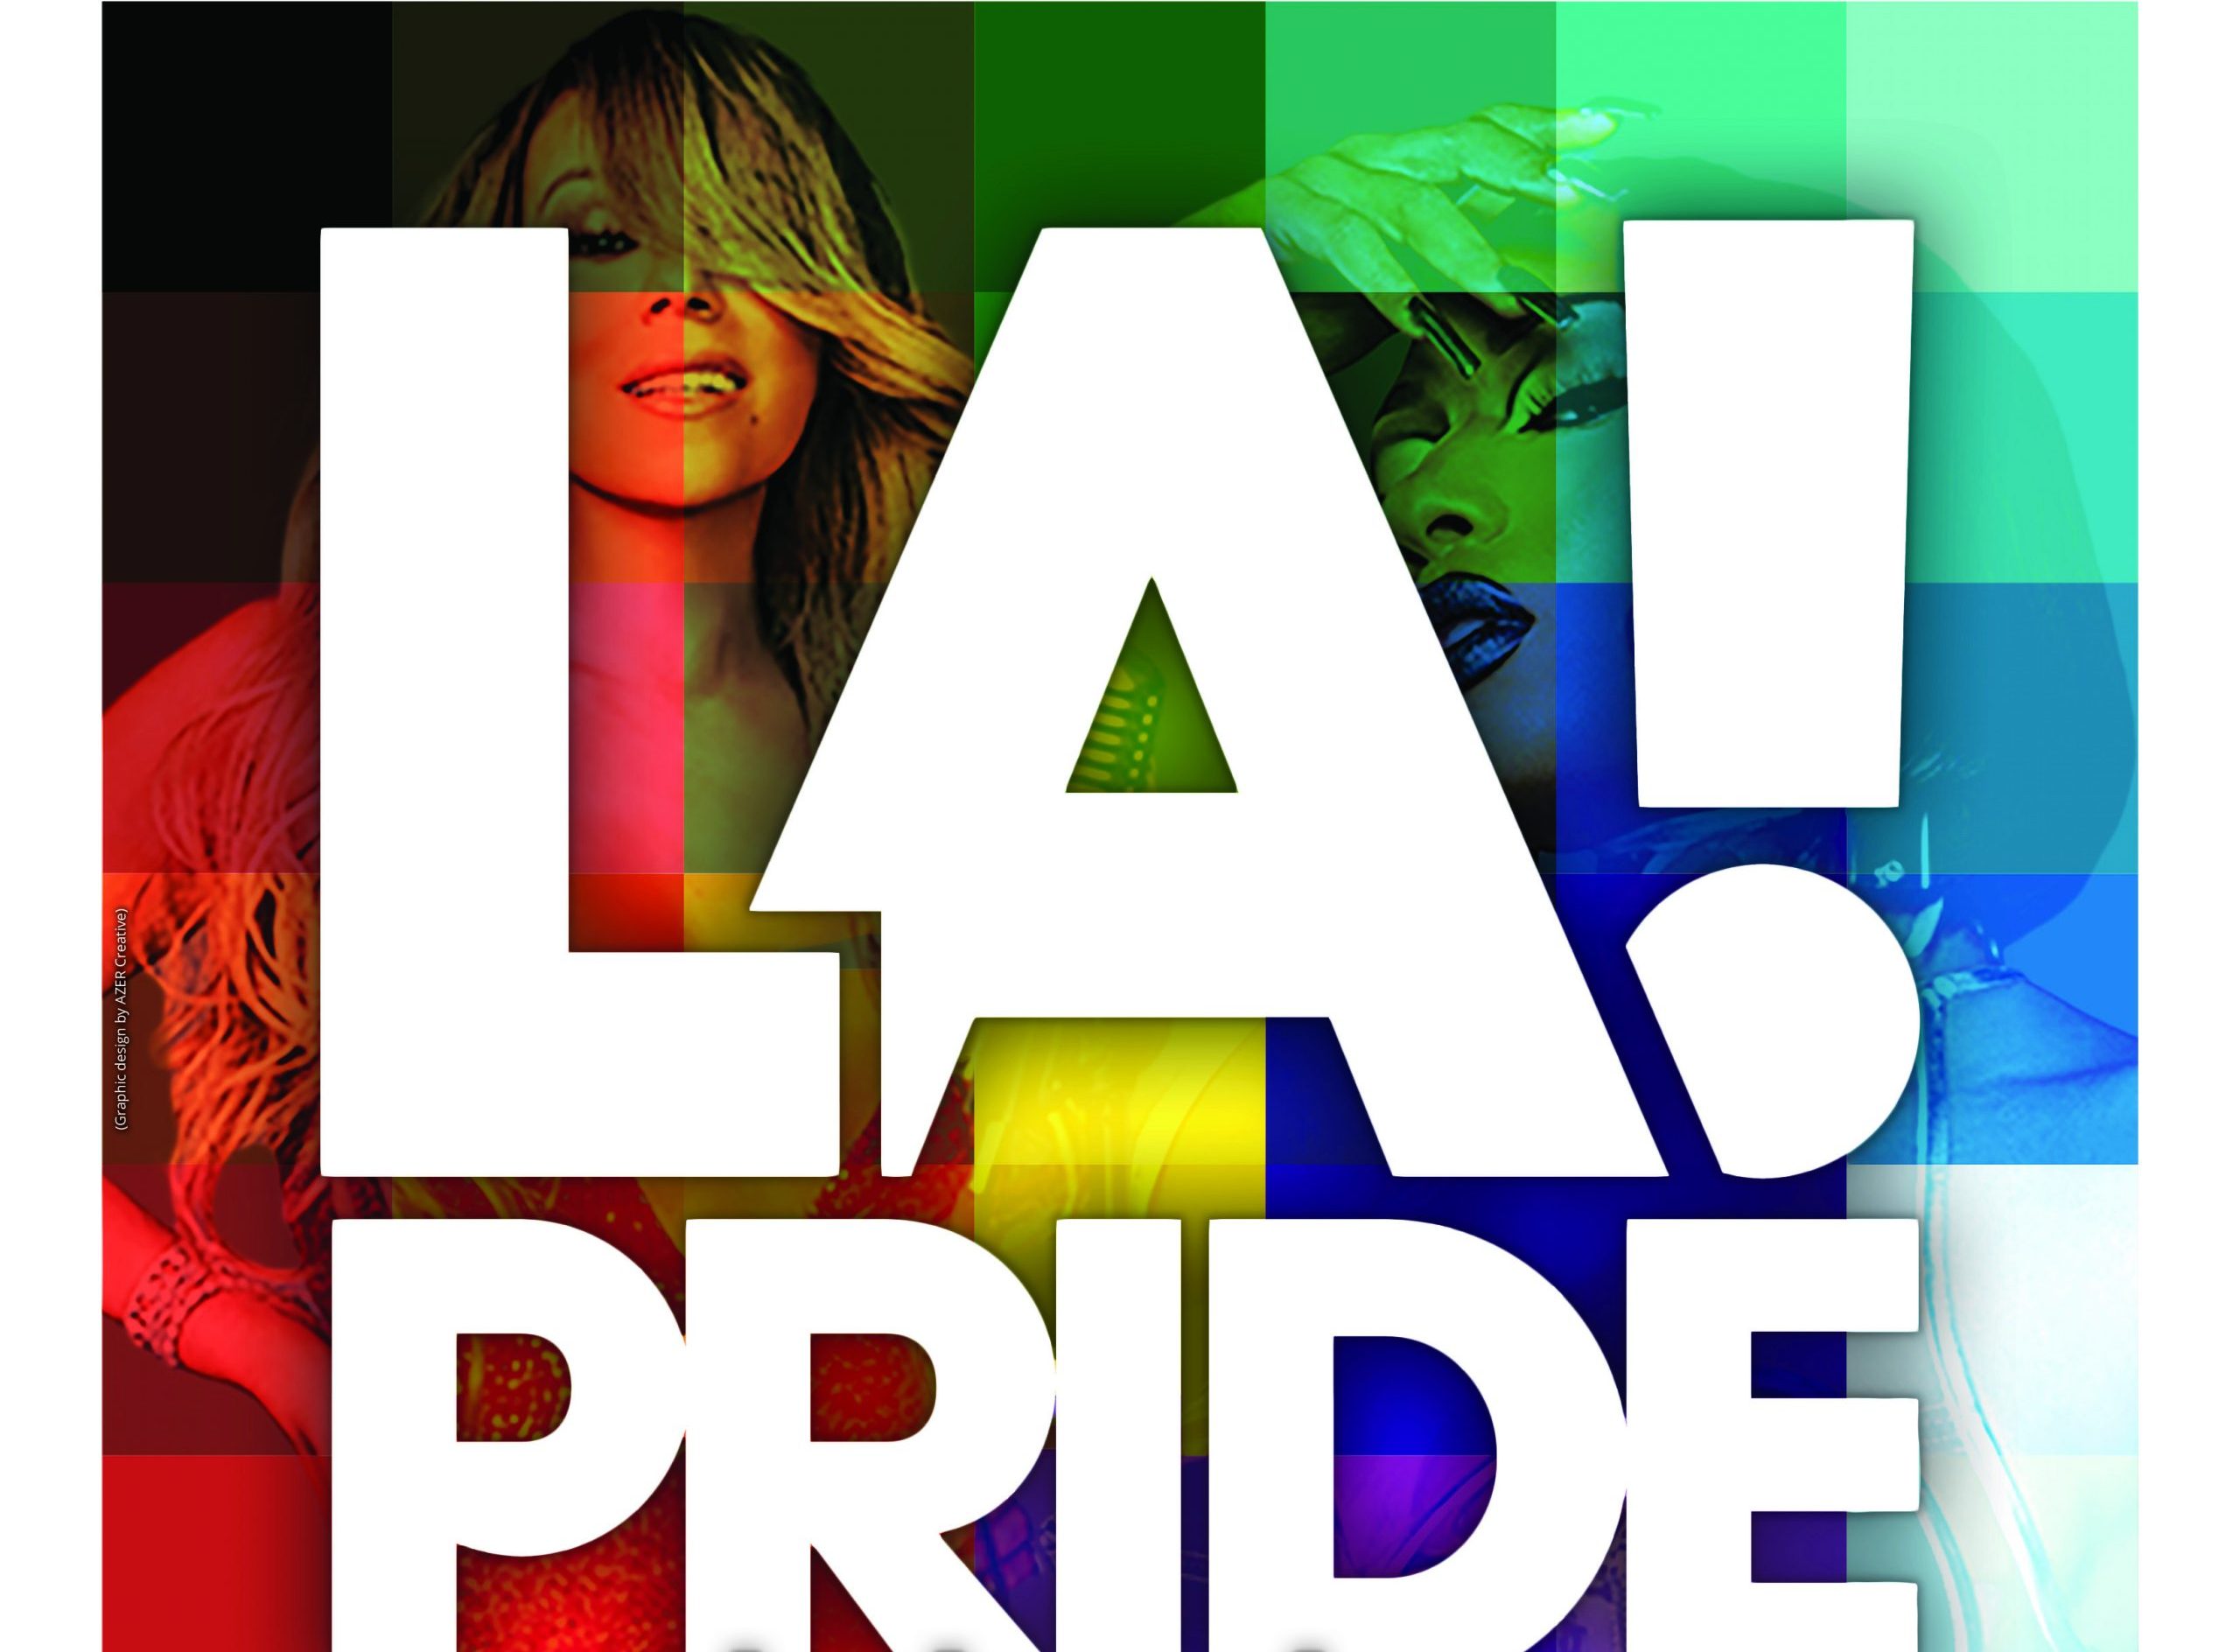 Mariah Carey & Megan Thee Stallion grab the spotlights at LA Pride